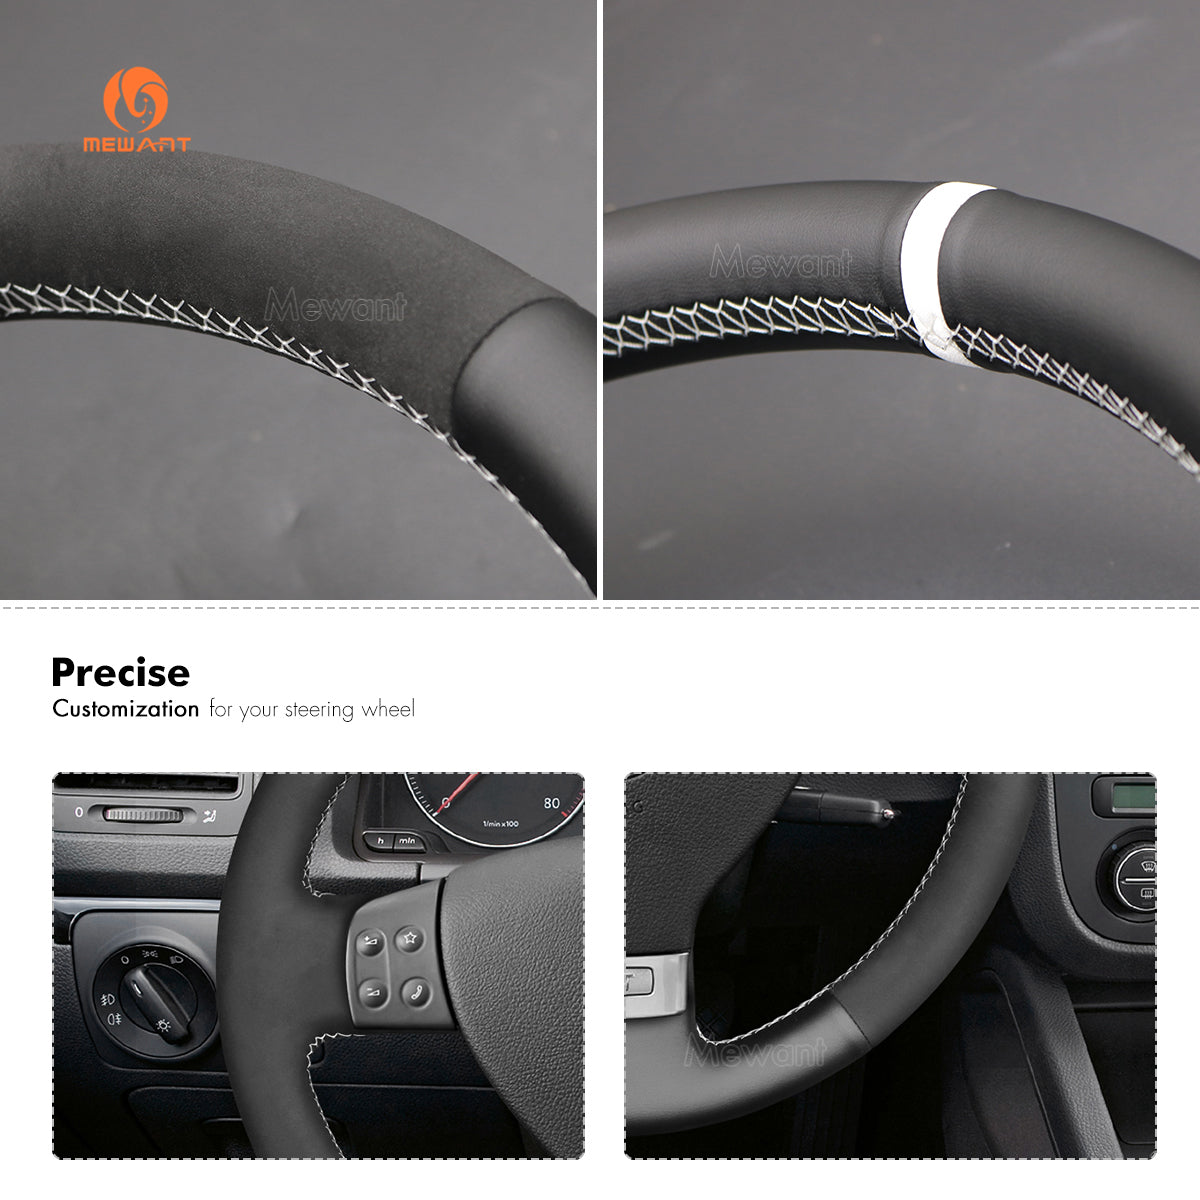 Car Steering Wheel Cover for Volkswagen VW Golf 5 Polo Jetta Passat Touran Caddy EOS